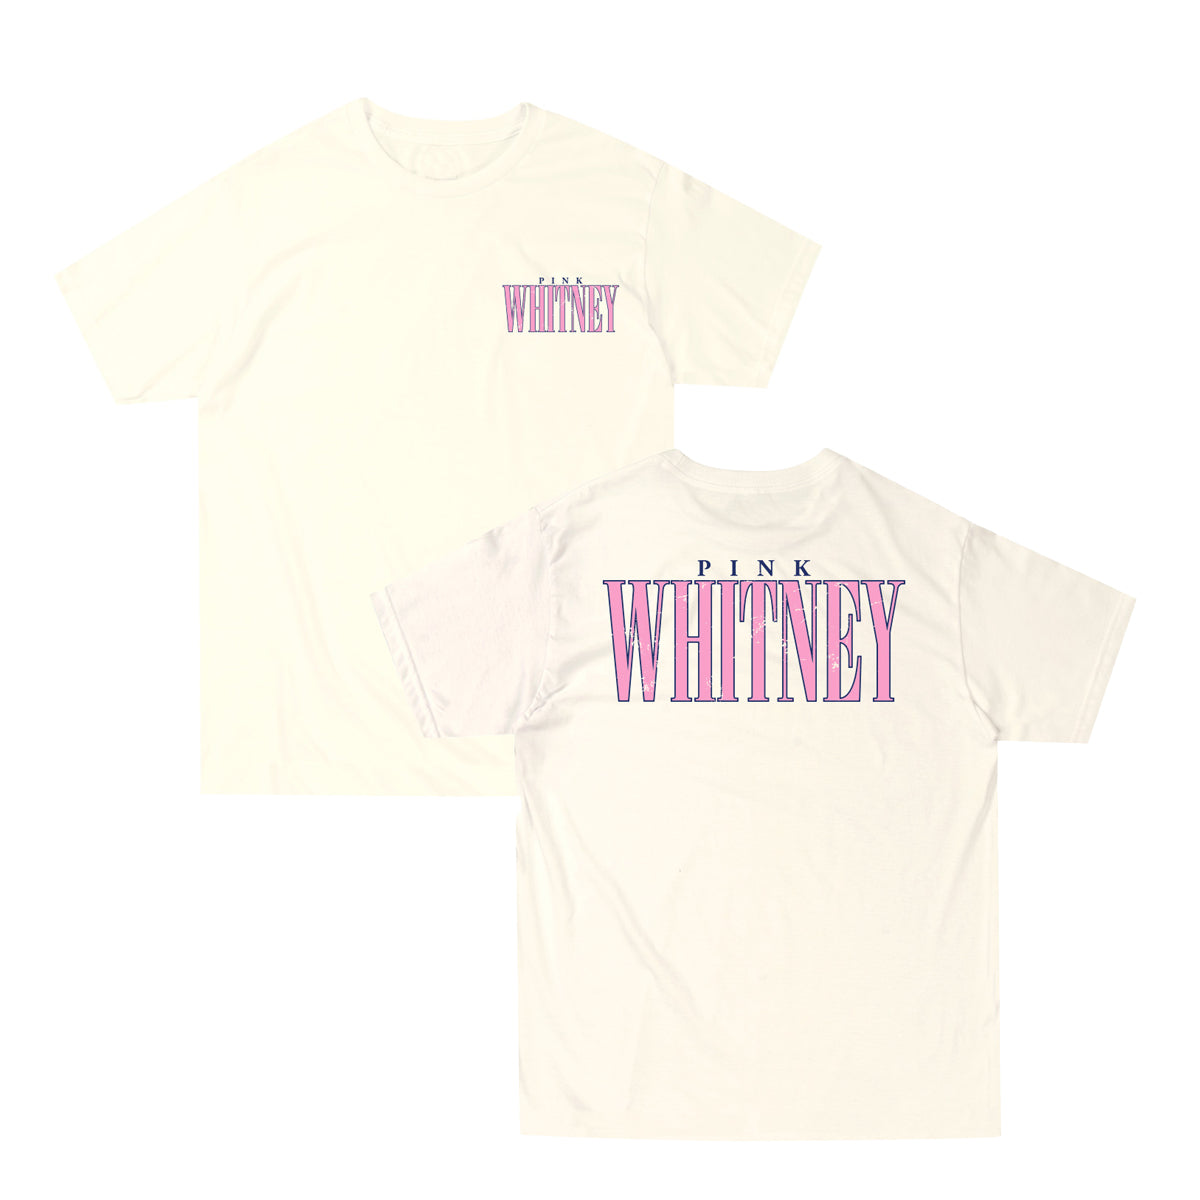 Pink Whitney Stacked Logo Tee